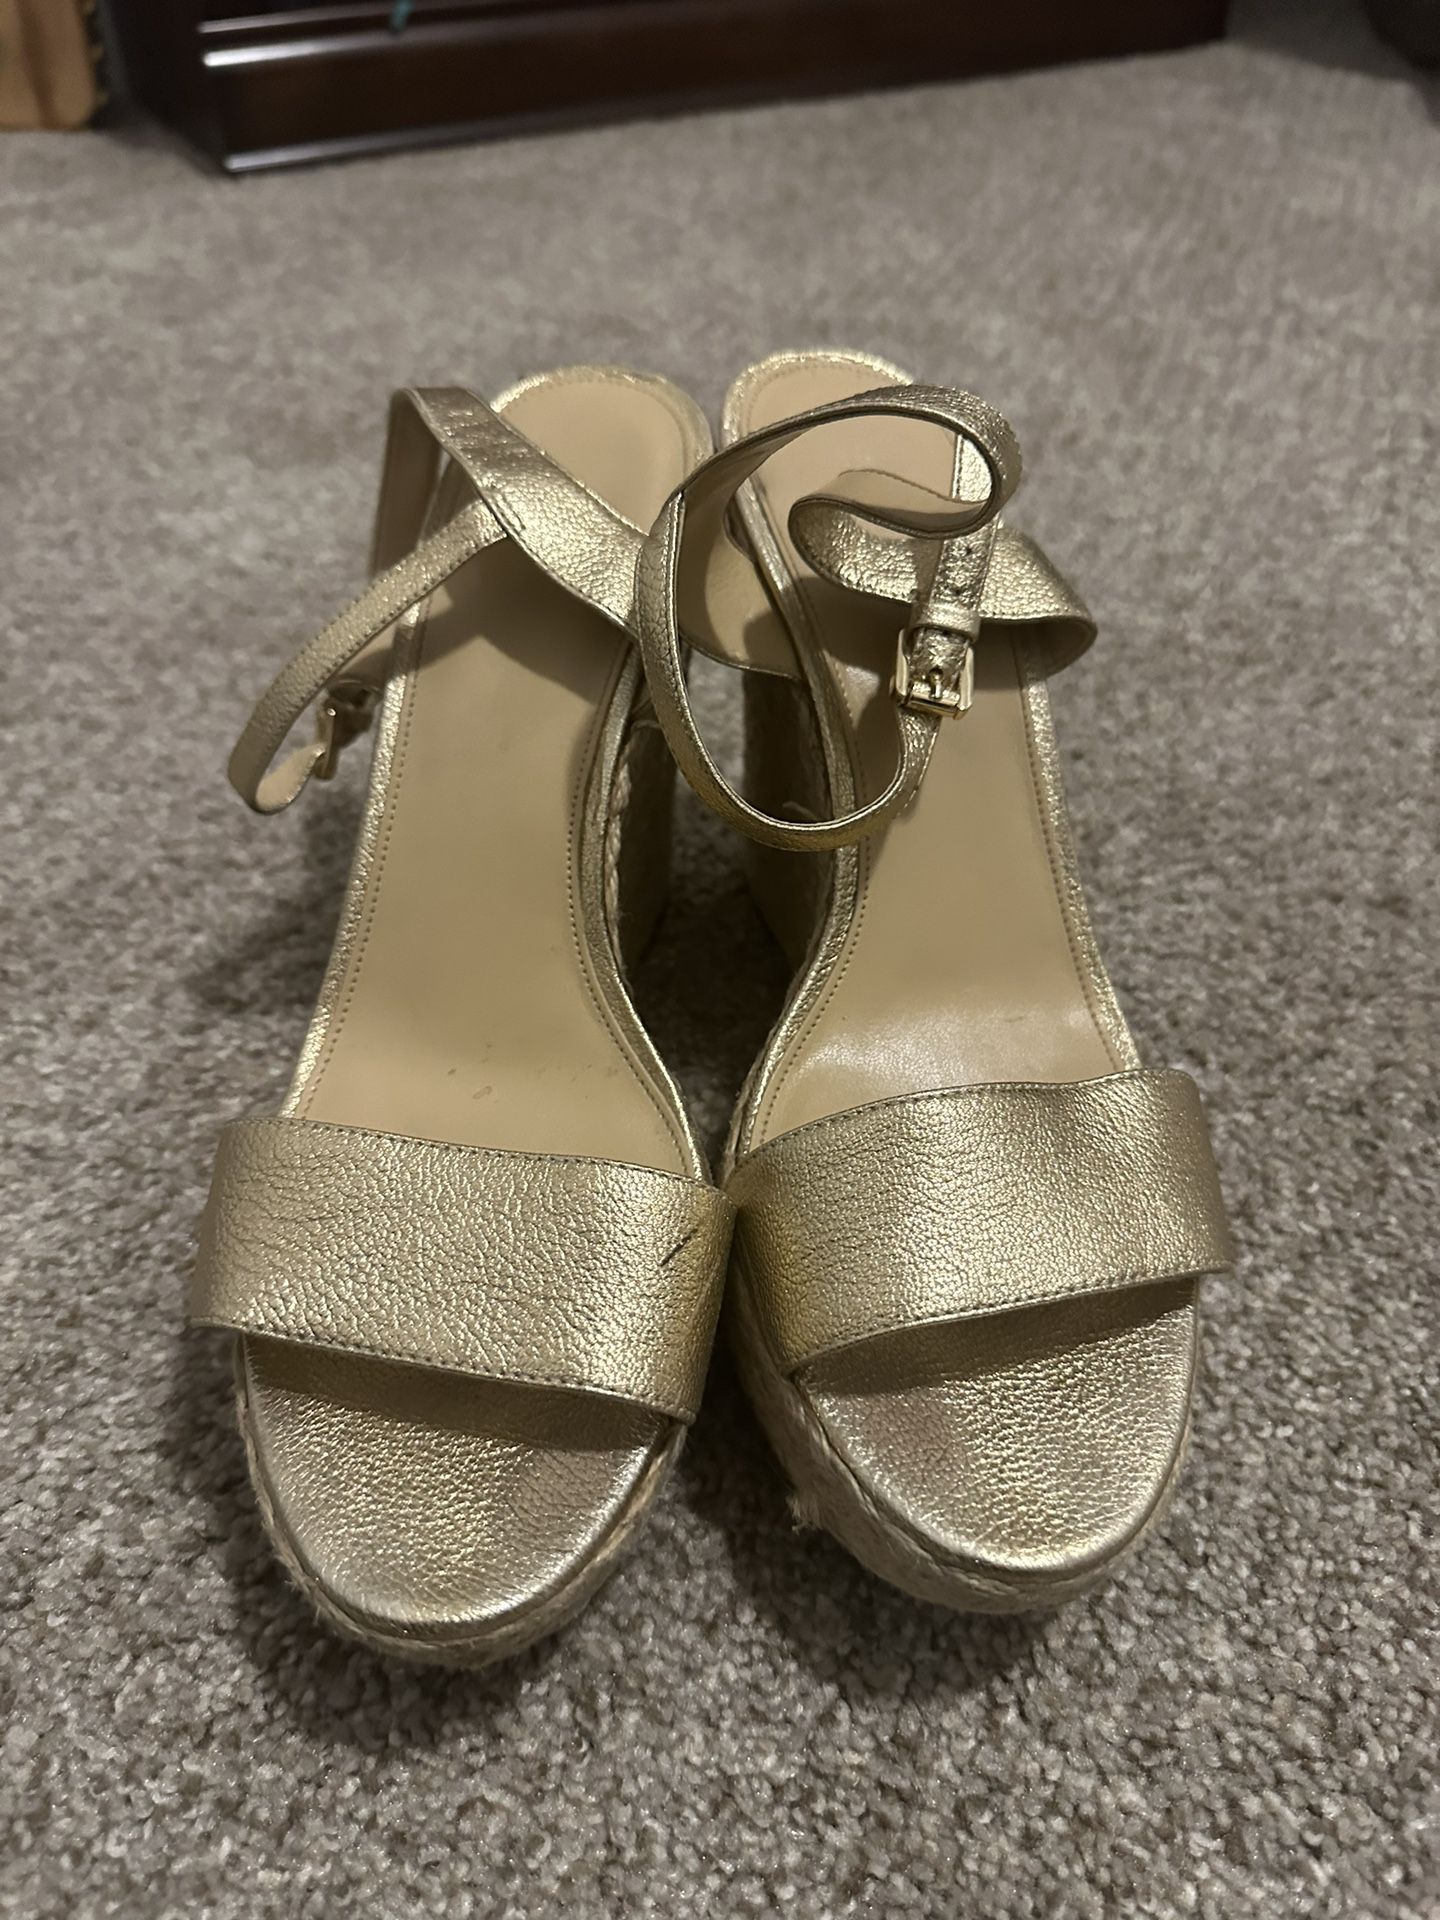 Michael Kors Wedge Sandals (size 11)